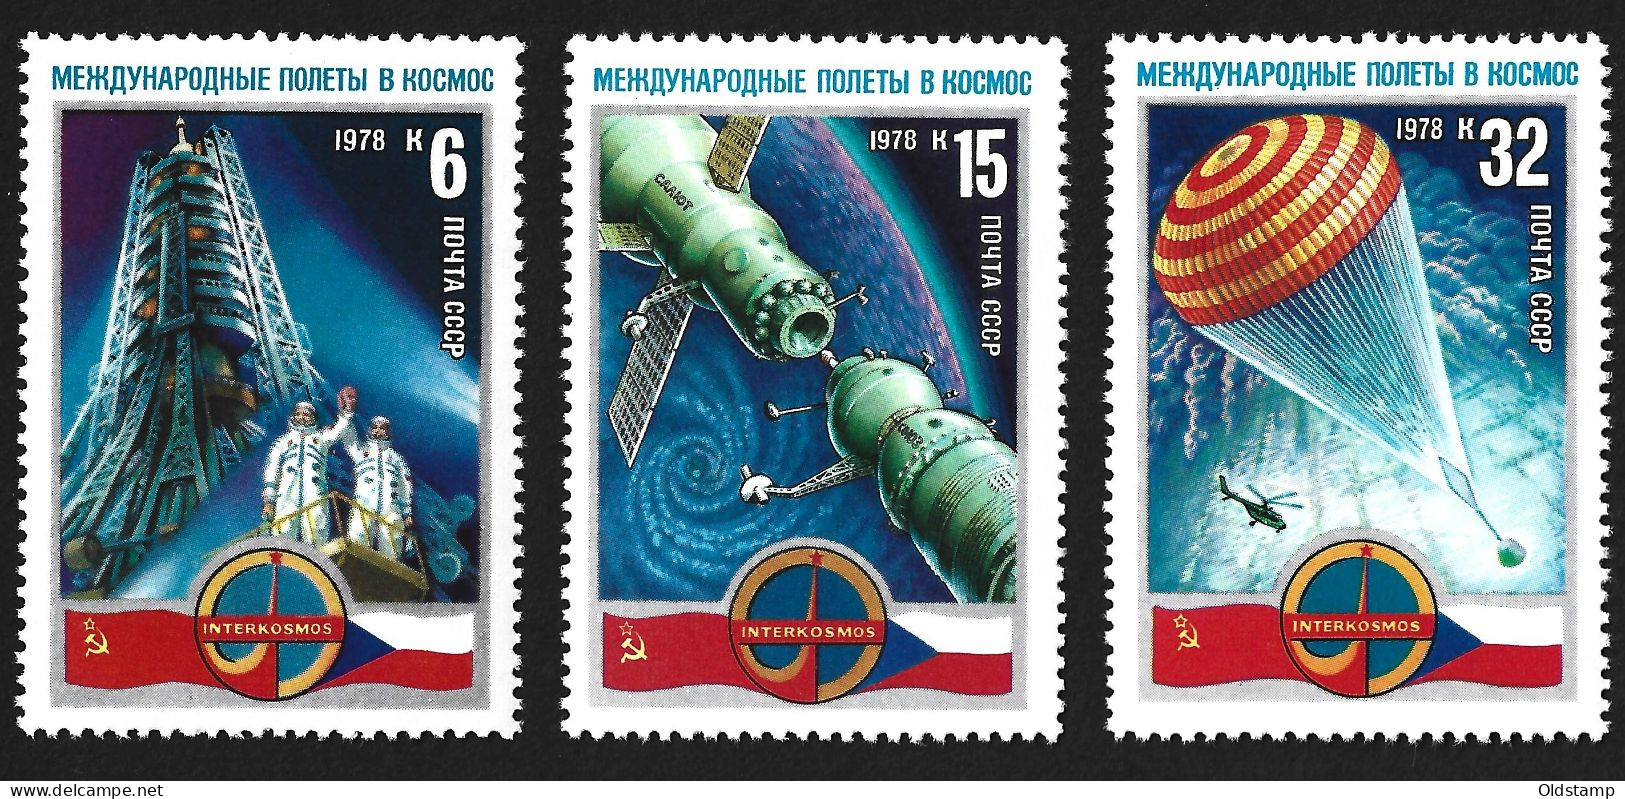 SPACE USSR 1978 INTERCOSMOS MNH Full Set Astronauts Soviet-Czechoslovak Space Program Transport Stamps Mi.# 4645 - 4647 - Collections